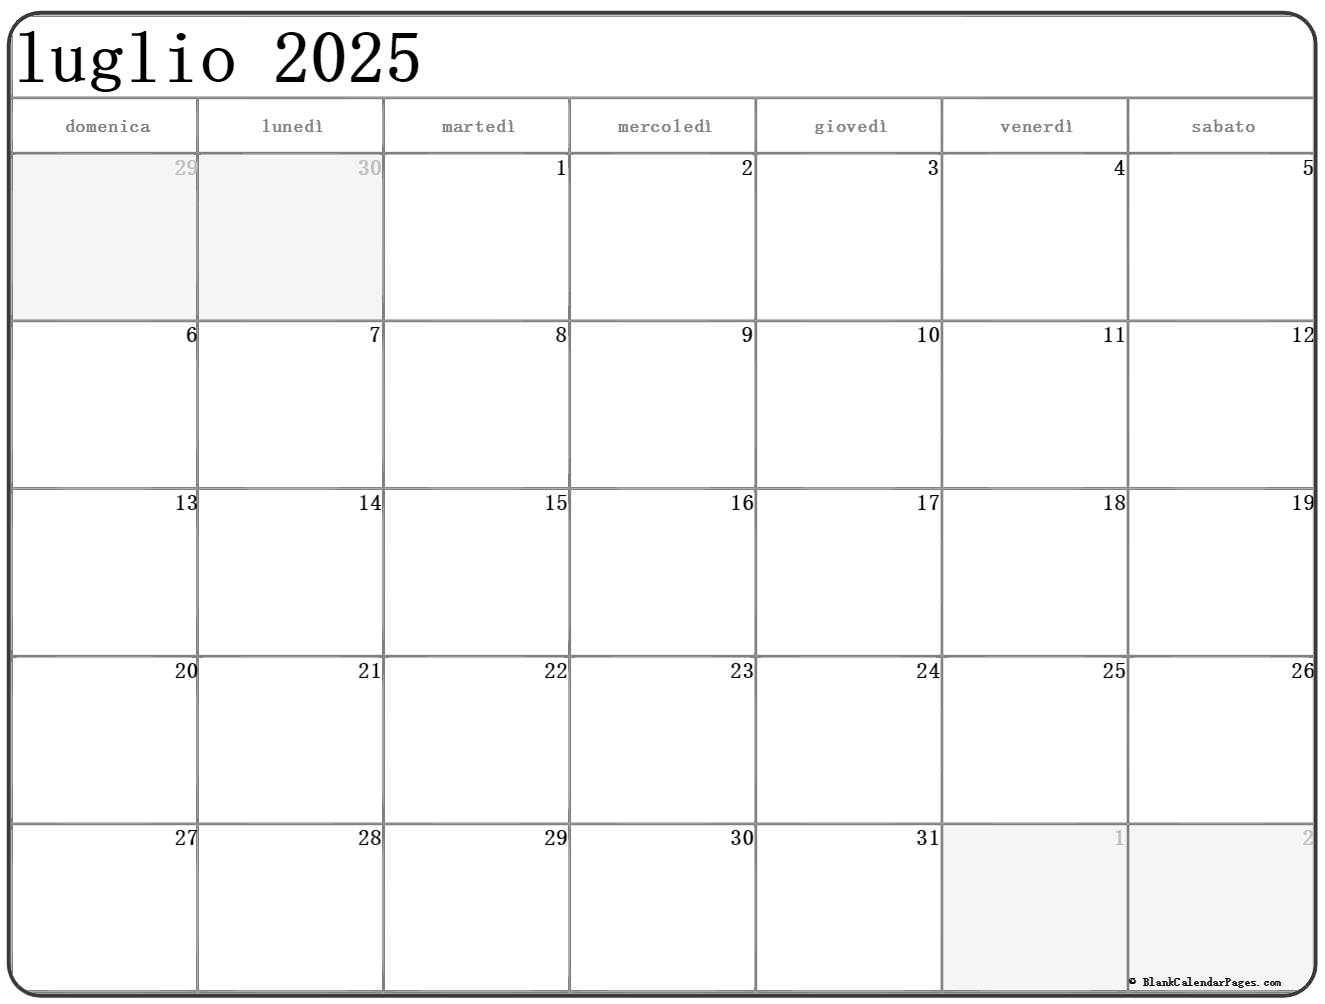 Апрель 2024. Календарь апрель 2024. Календарь на апрель 2024 года. Гороскоп на апрель 2024. Новая луна в апреле 2024